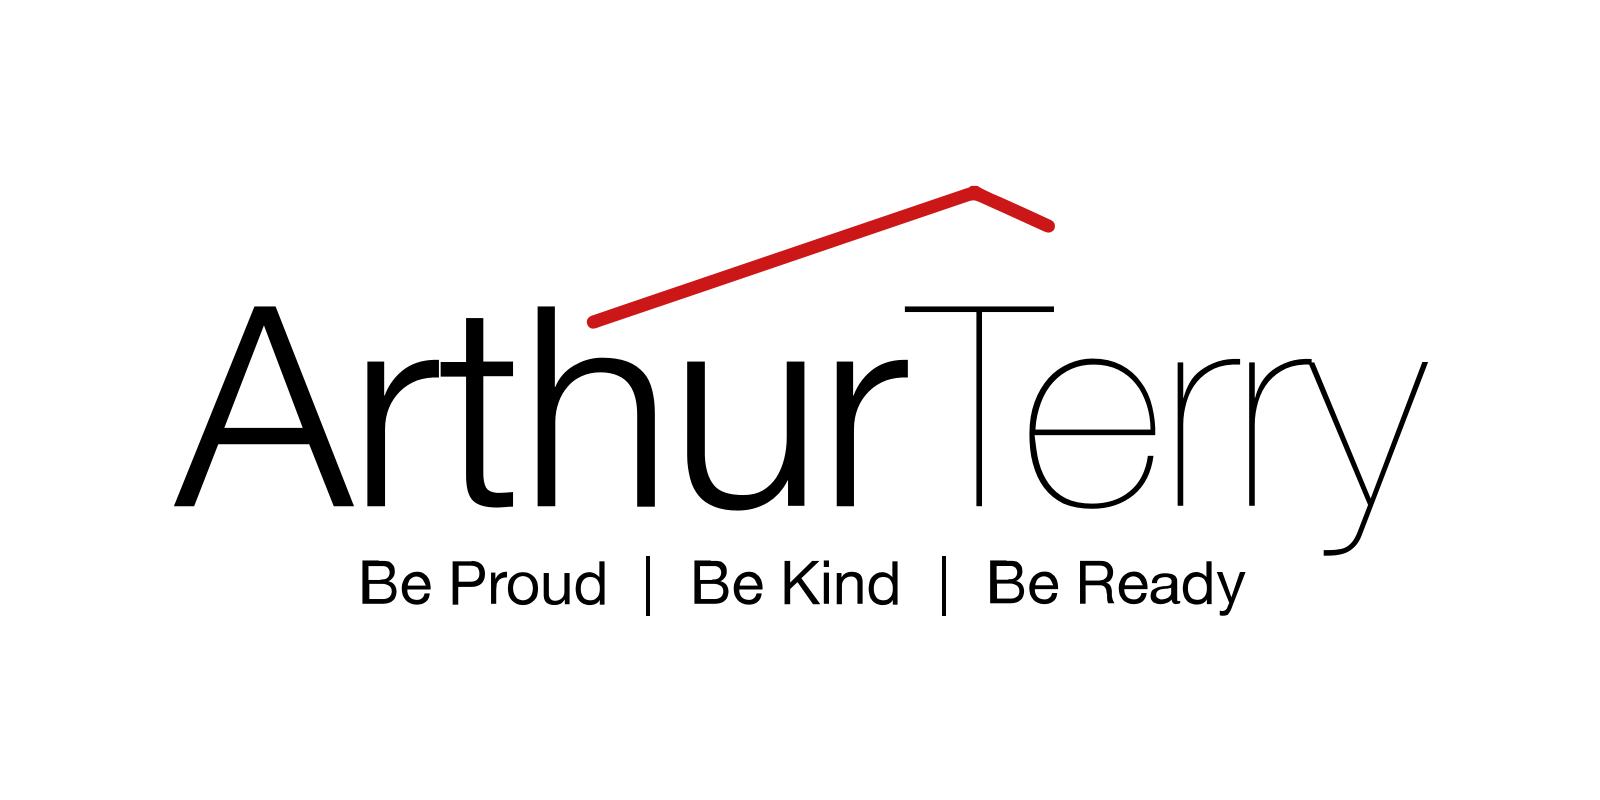 Go 4 Schools - The Arthur Terry School